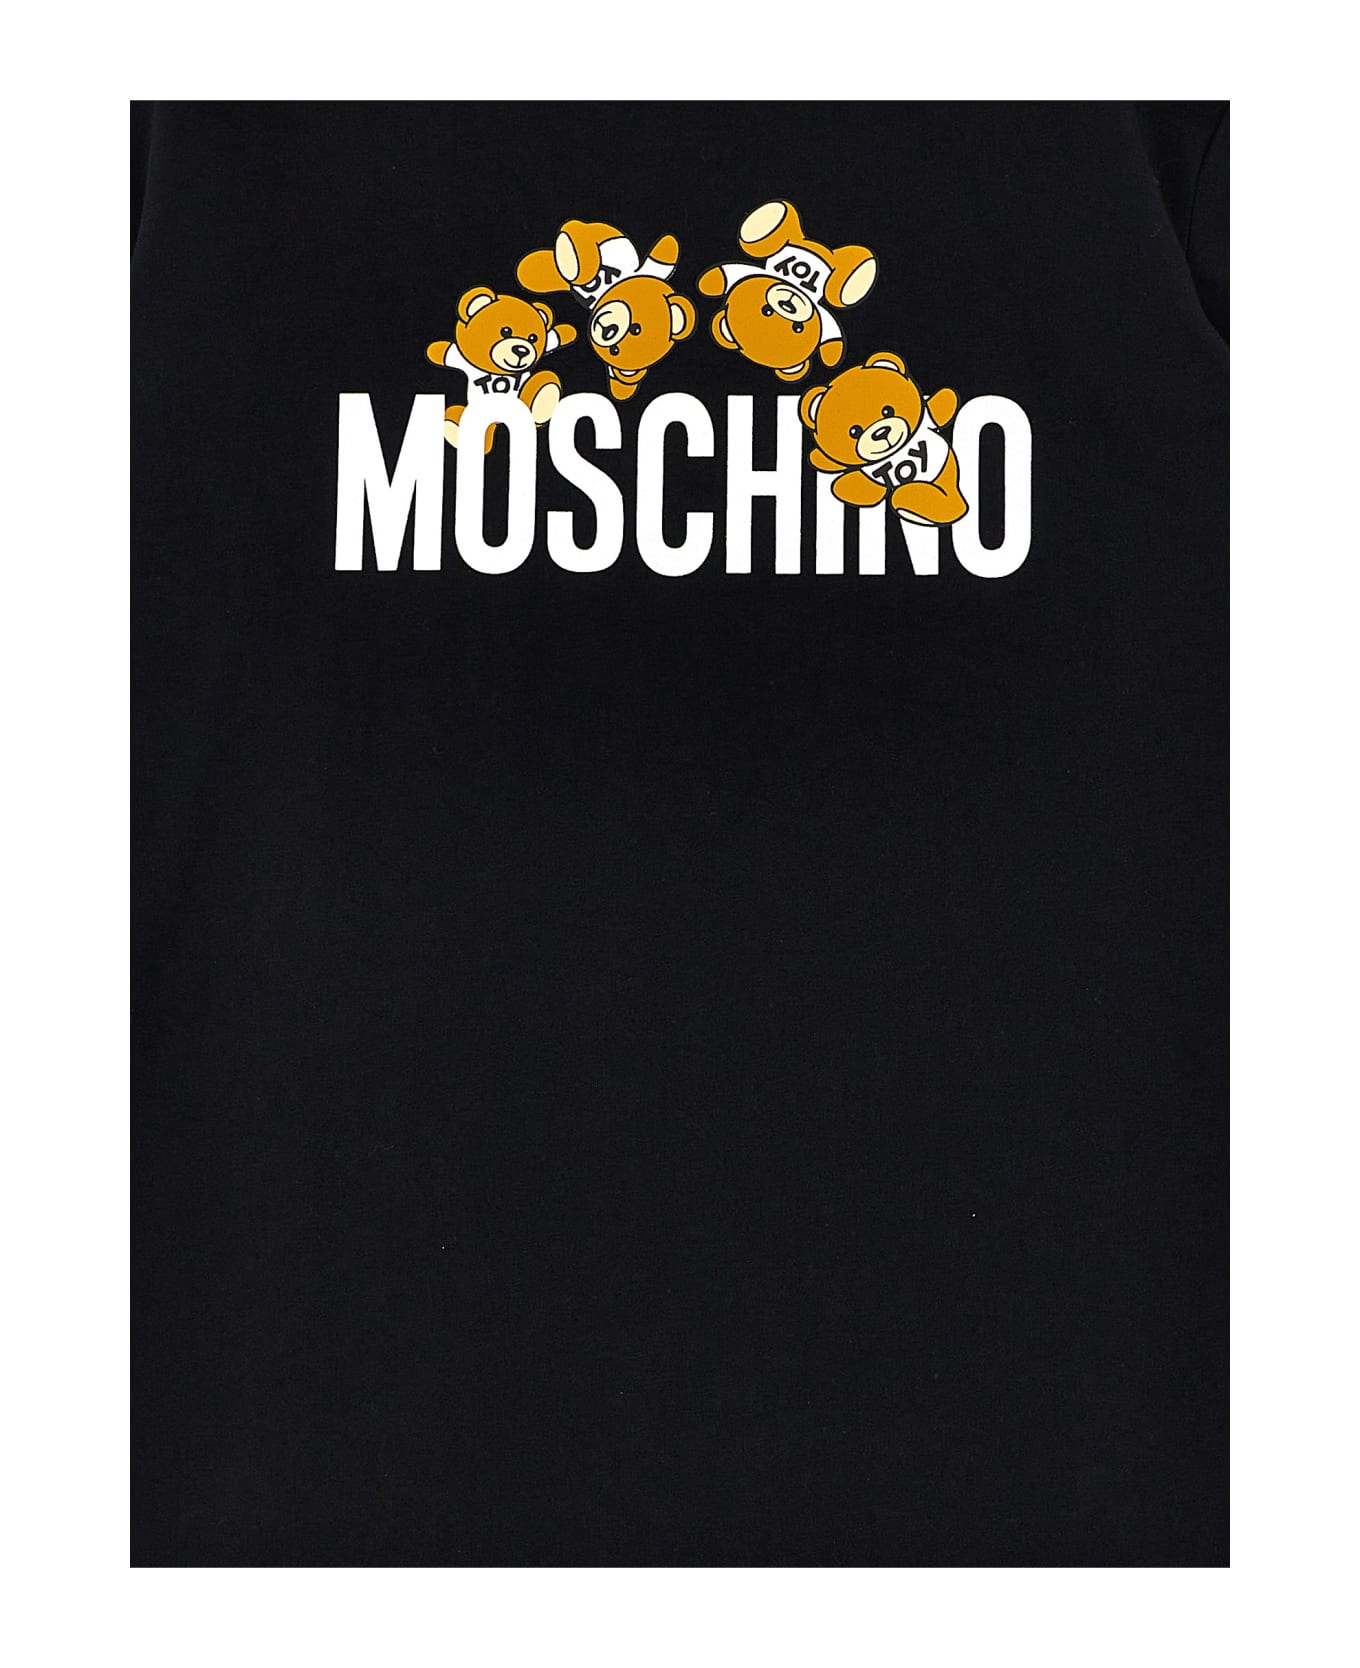 Moschino Logo Print T-shirt - Black  